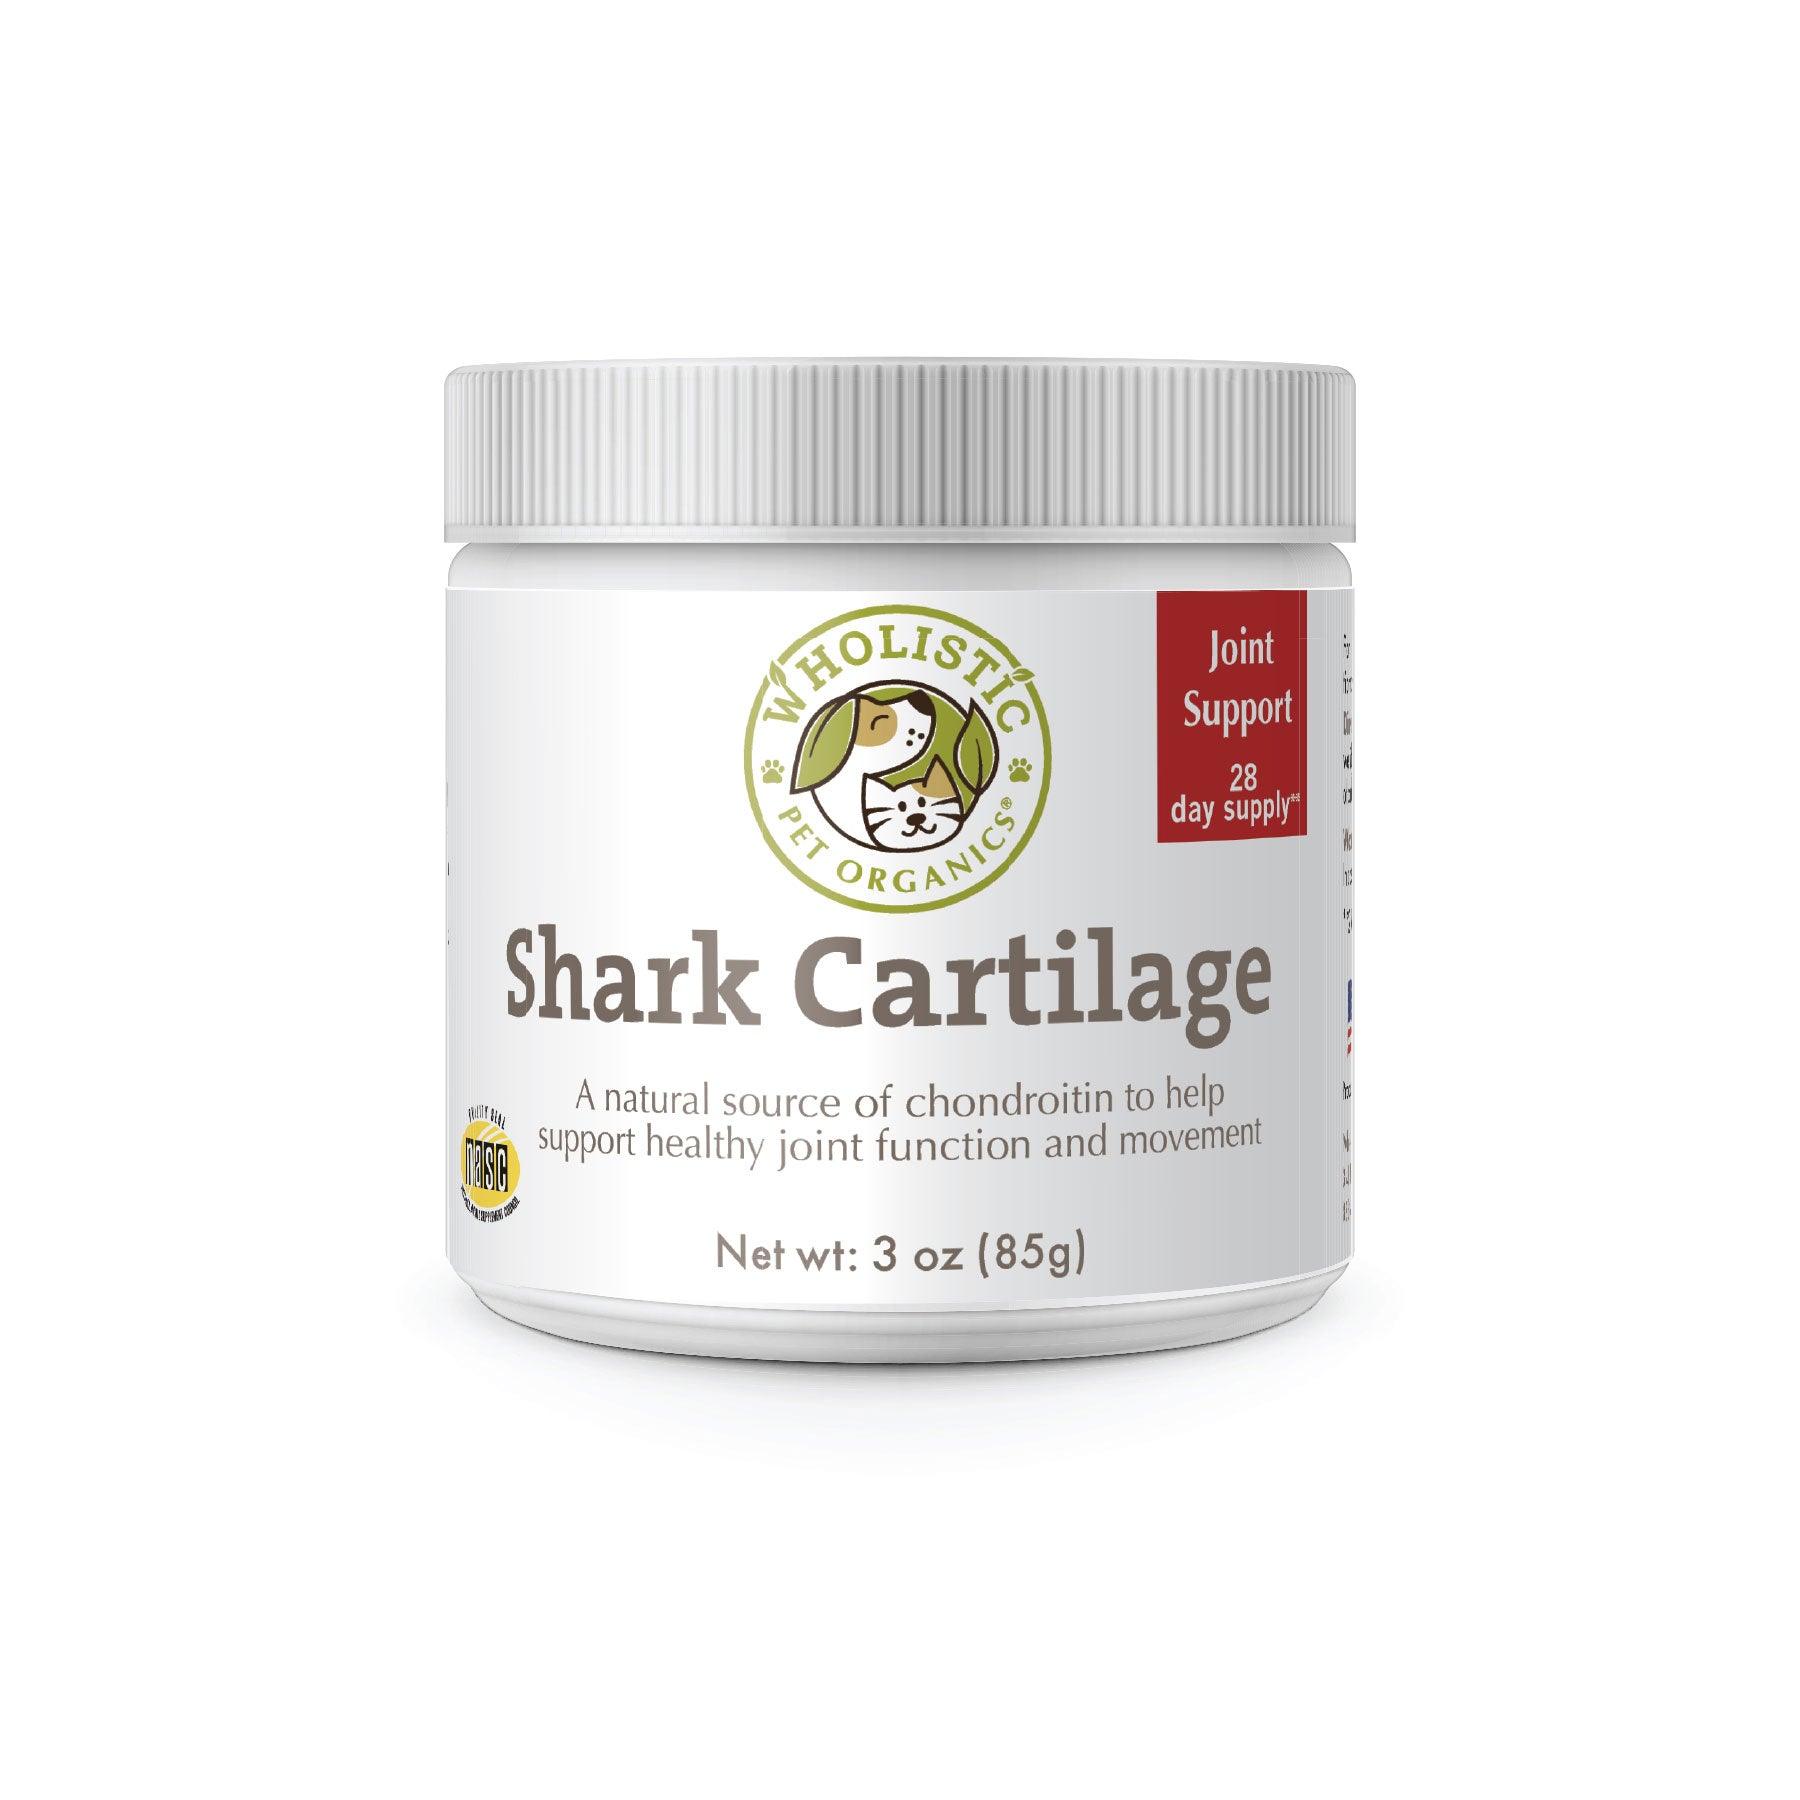 Wholistic Pet Organics Shark Cartilage Supplement for Dogs 3 oz